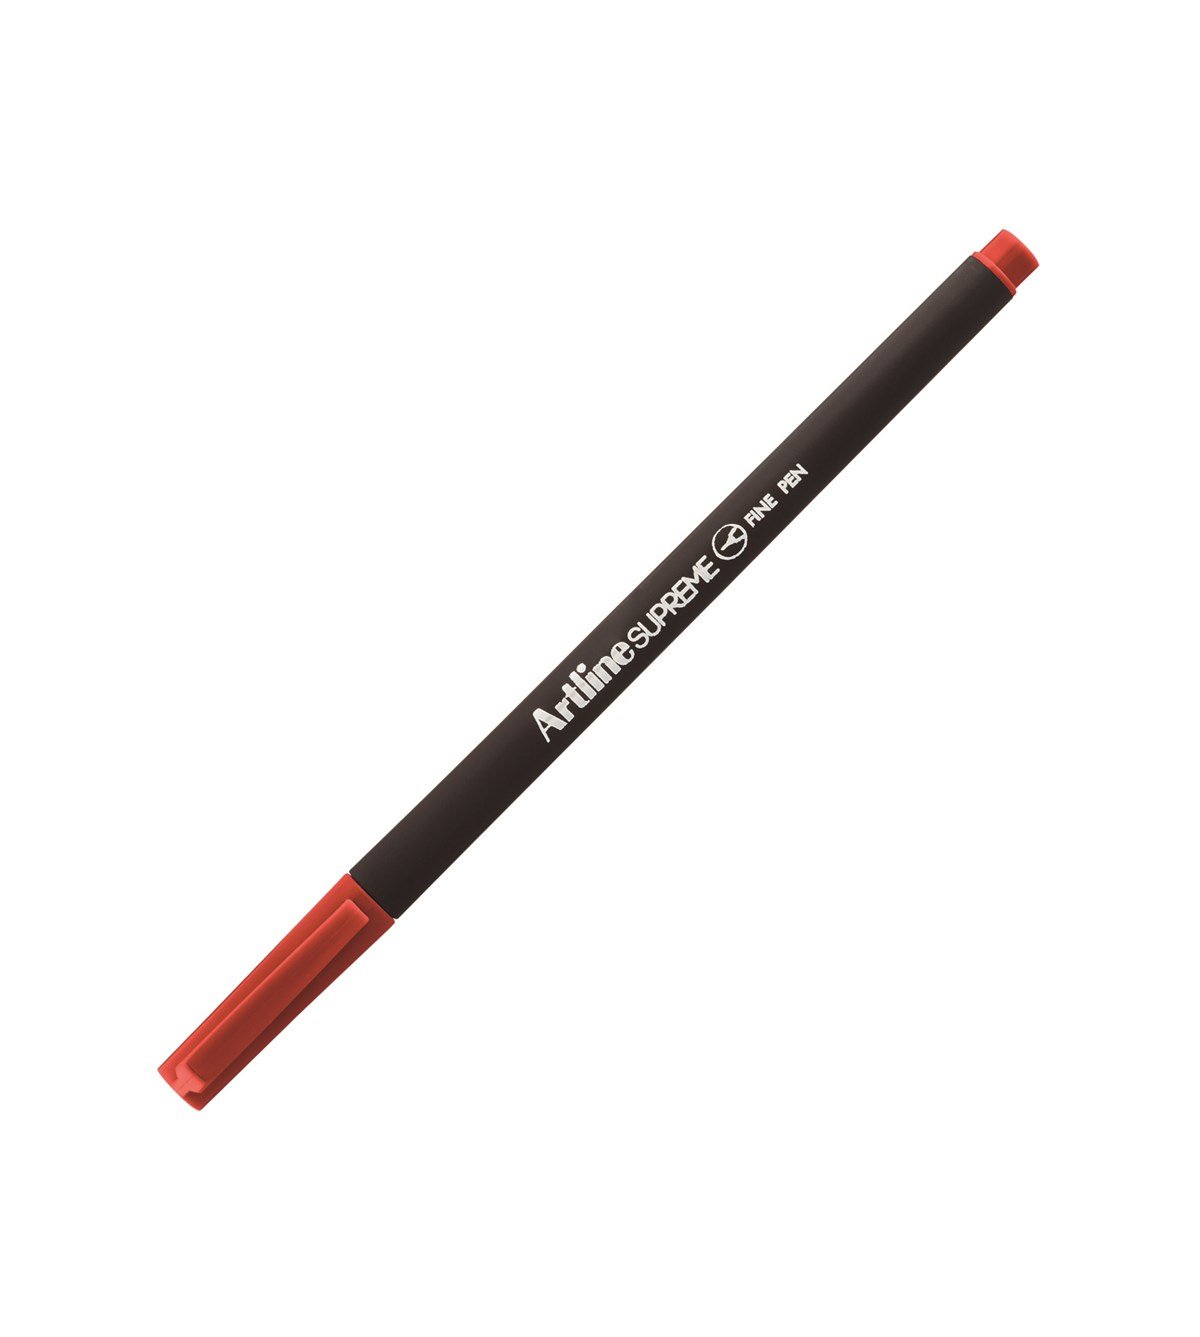 Artline Supreme Fine Pen 0.4mm Dark Red